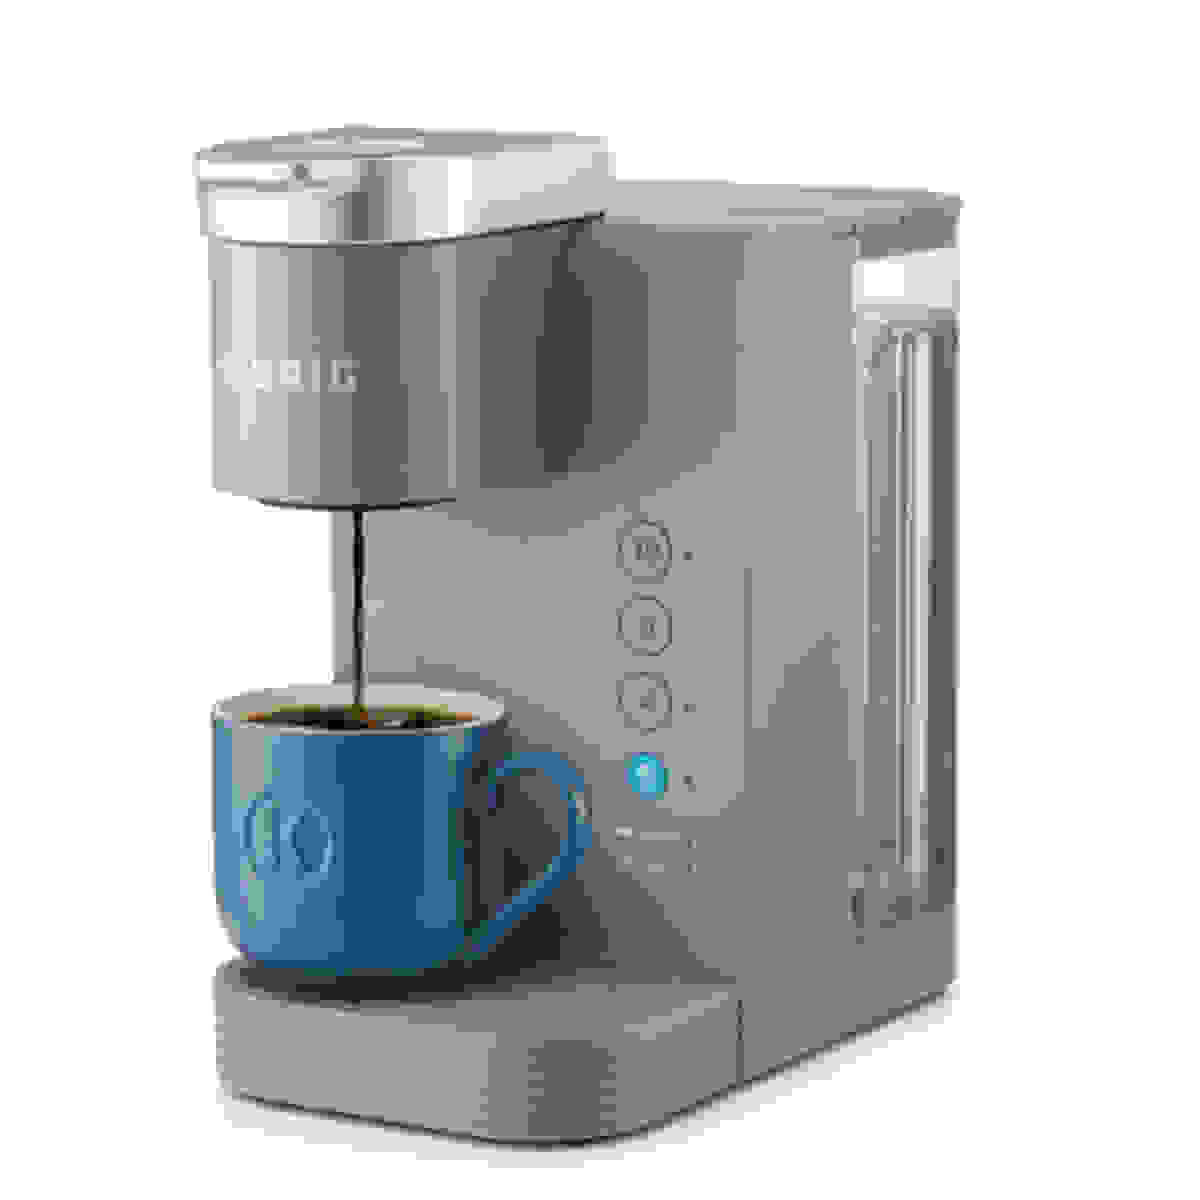 Keurig Coffee Maker Repair - iFixit